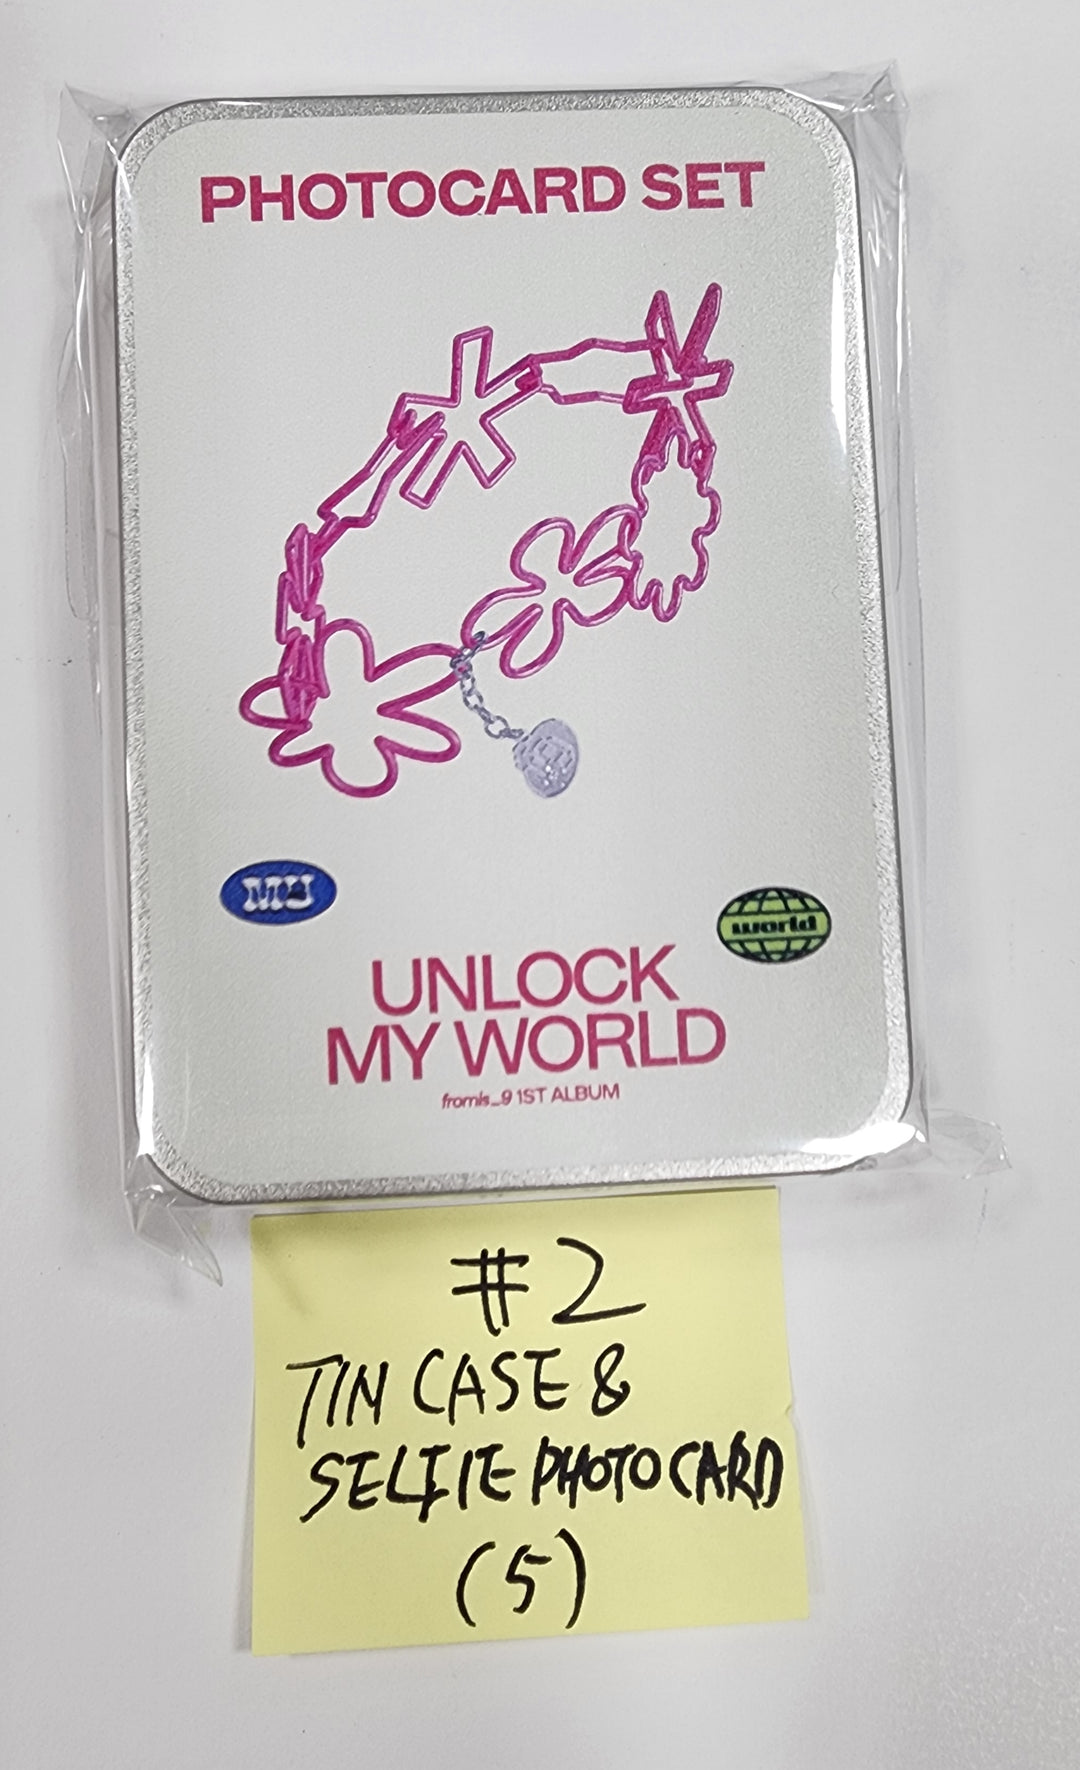 Fromis_9 "Unlock My World" - Withmuu Official MD [Postcard Book, Tincase & Selfie Photocard]